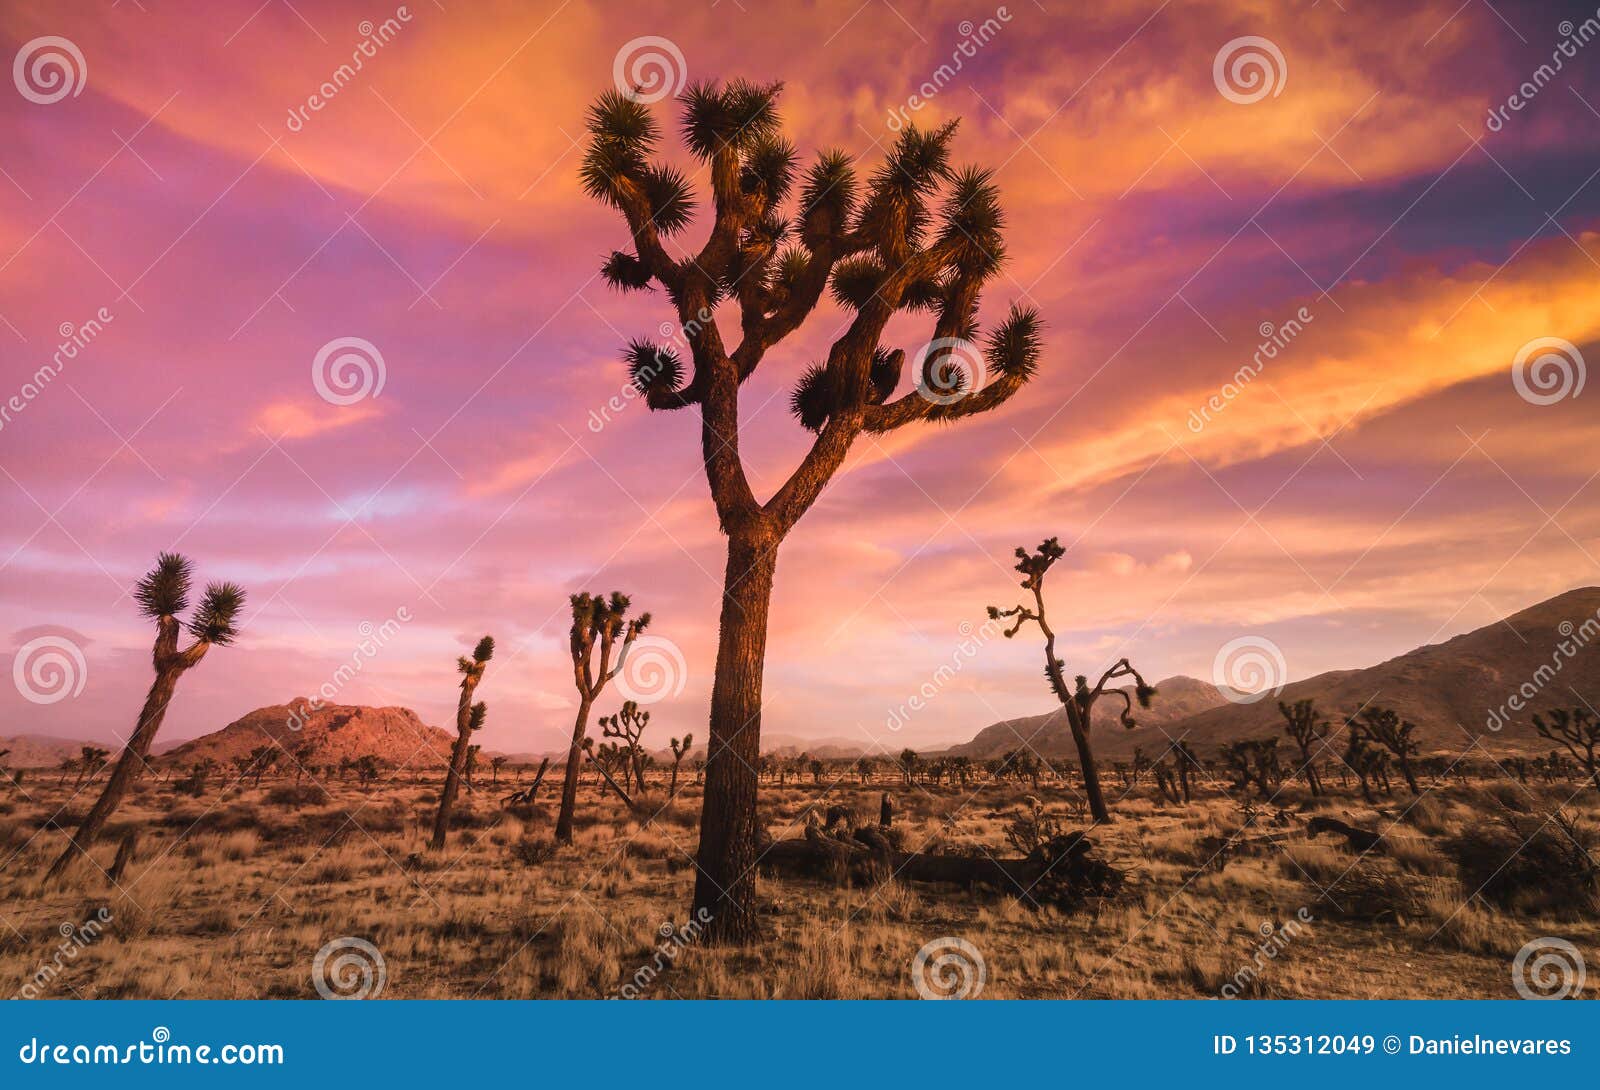 colorful desert sunset in high elevation joshua tree national park